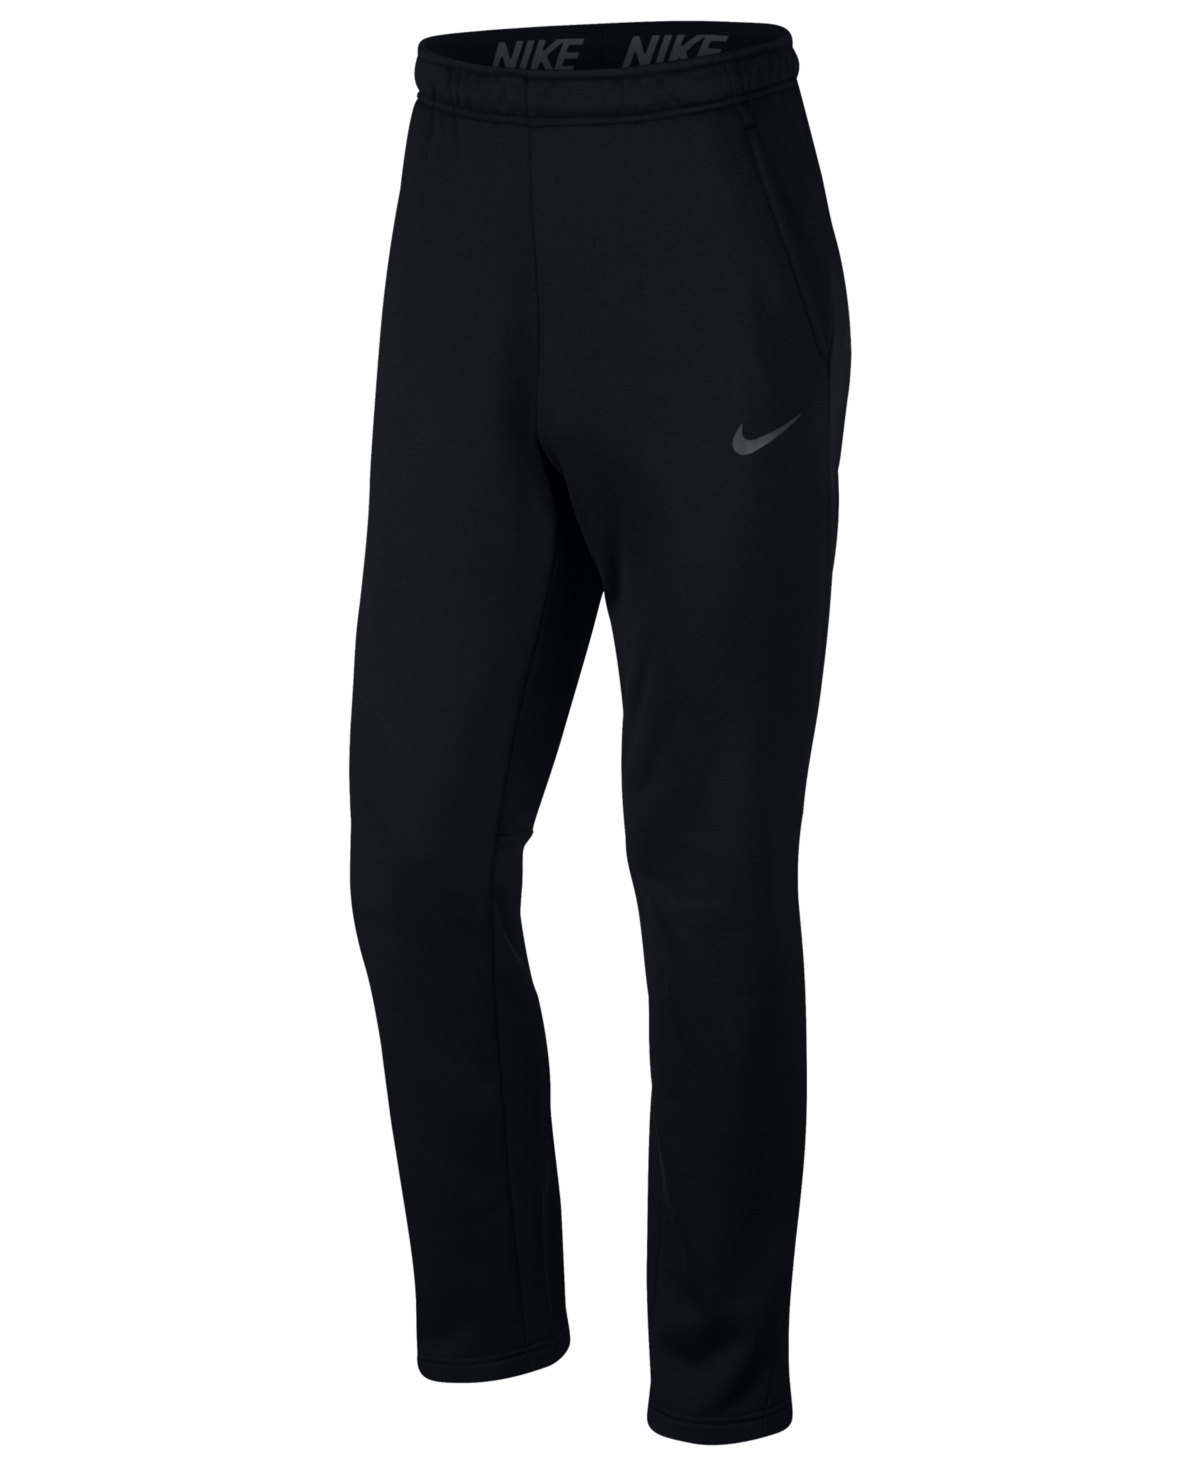 UPC 886668211589 product image for Nike Men's Therma Open Bottom Training Pants | upcitemdb.com